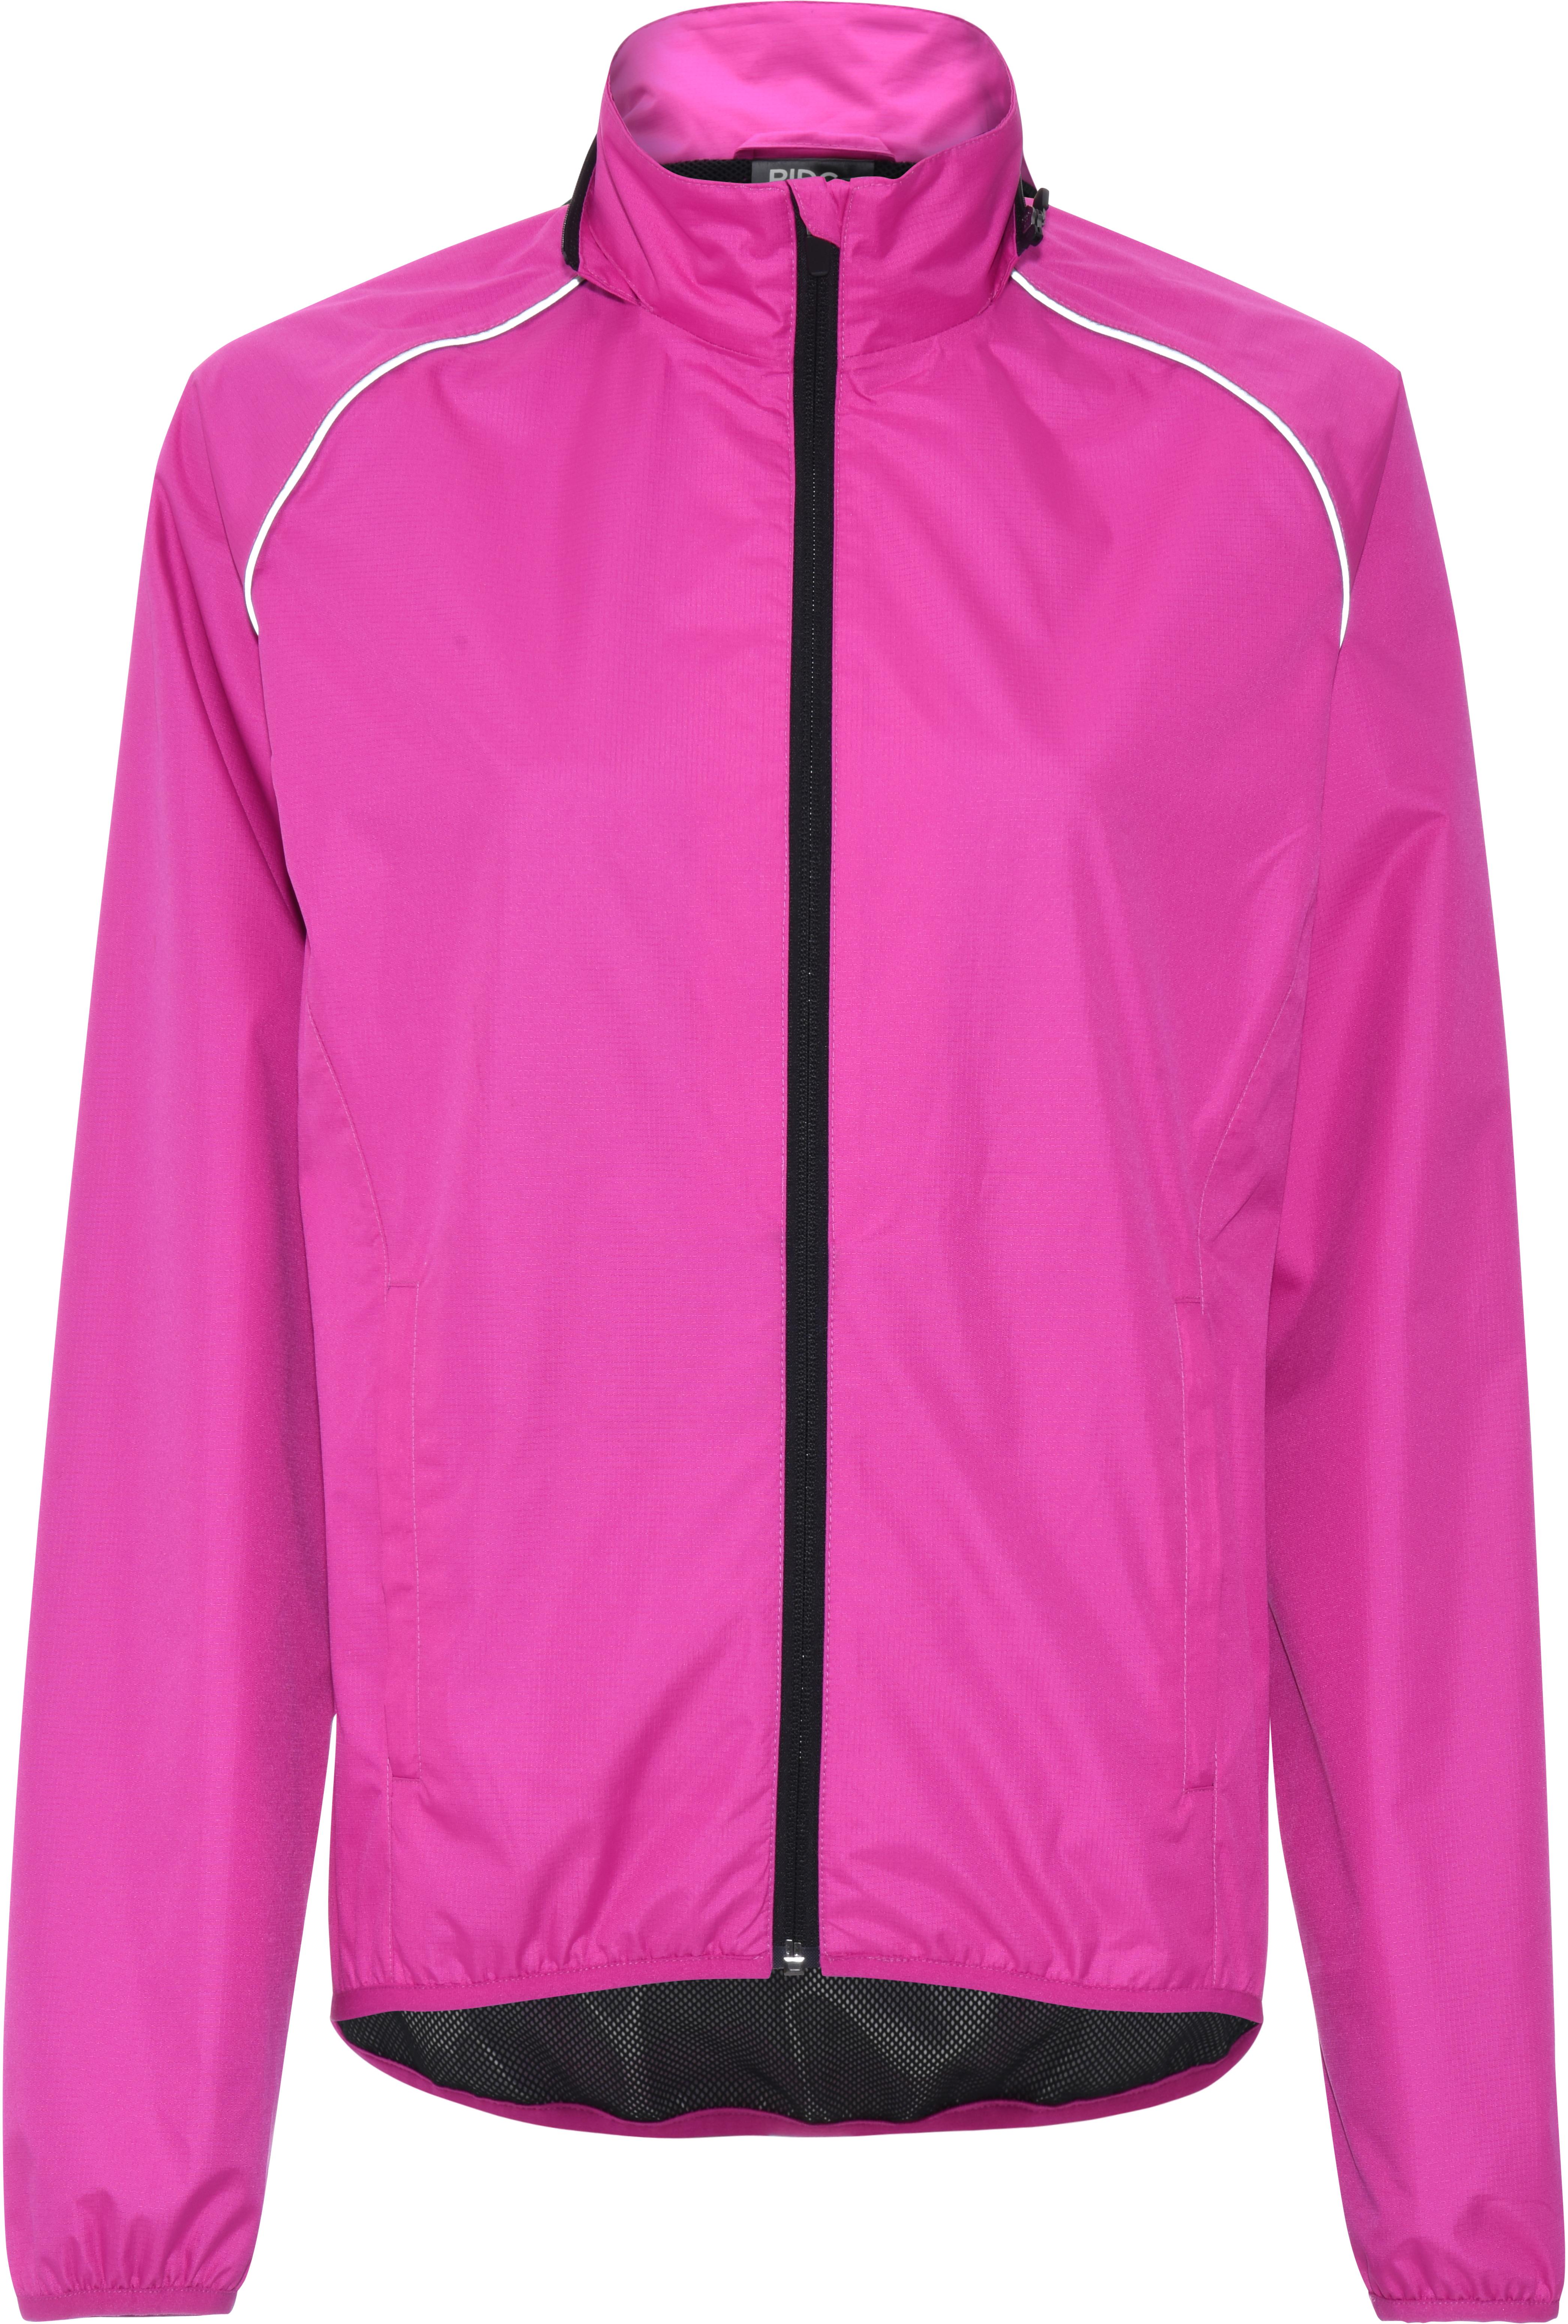 Ridge Womens Waterproof Jacket - Pink, 8